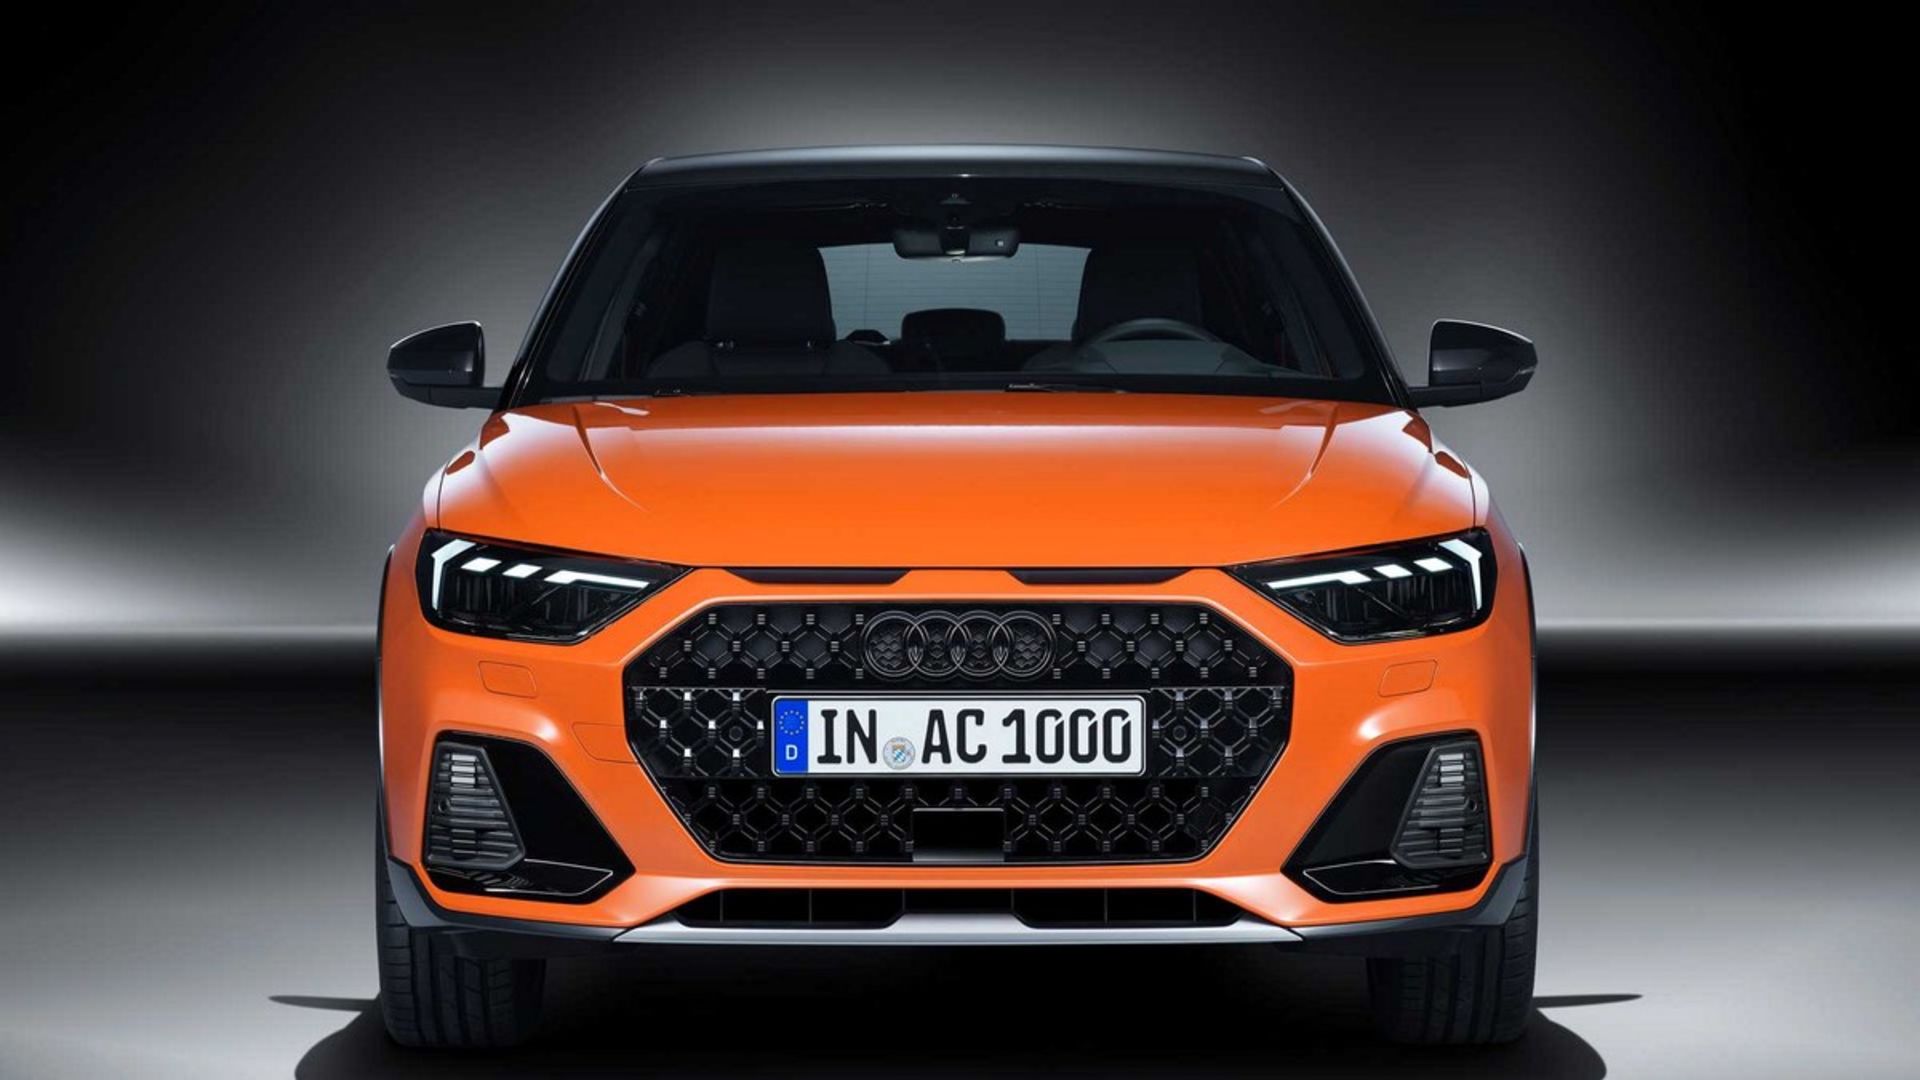 Audi A1 Citycarver